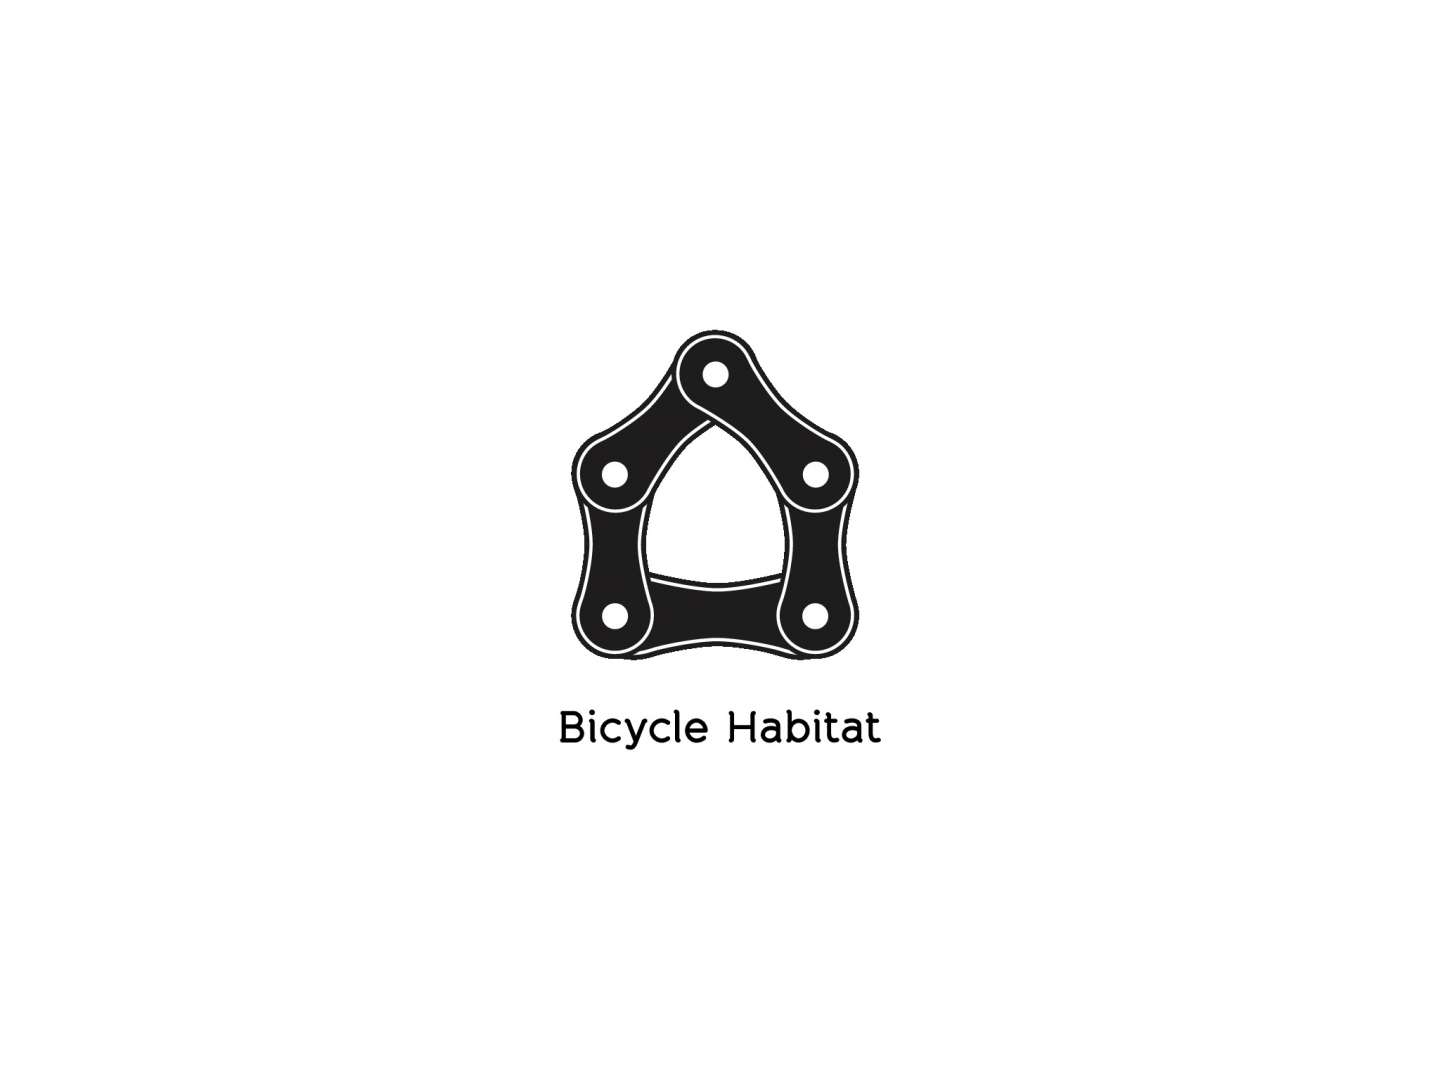 Bicycle Habitat